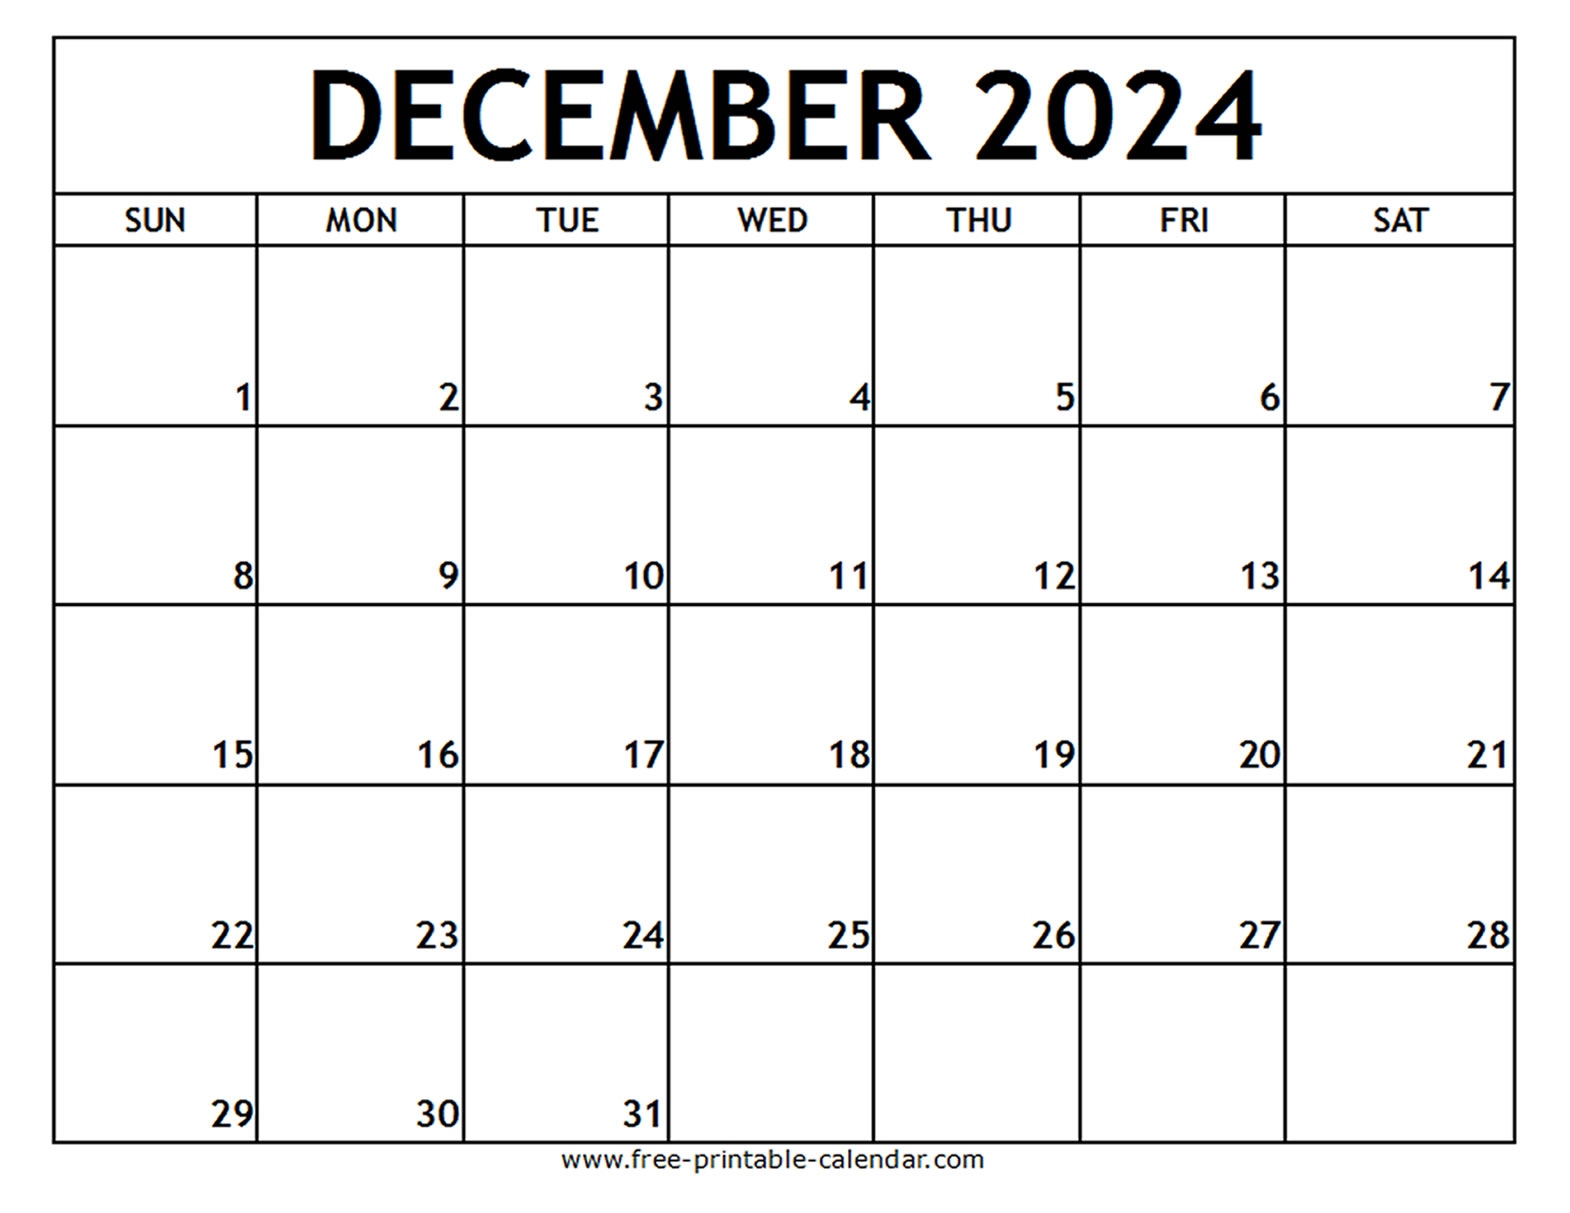 December 2024 Printable Calendar - Free-Printable-Calendar with regard to Free Printable Calendar 2024 Deember